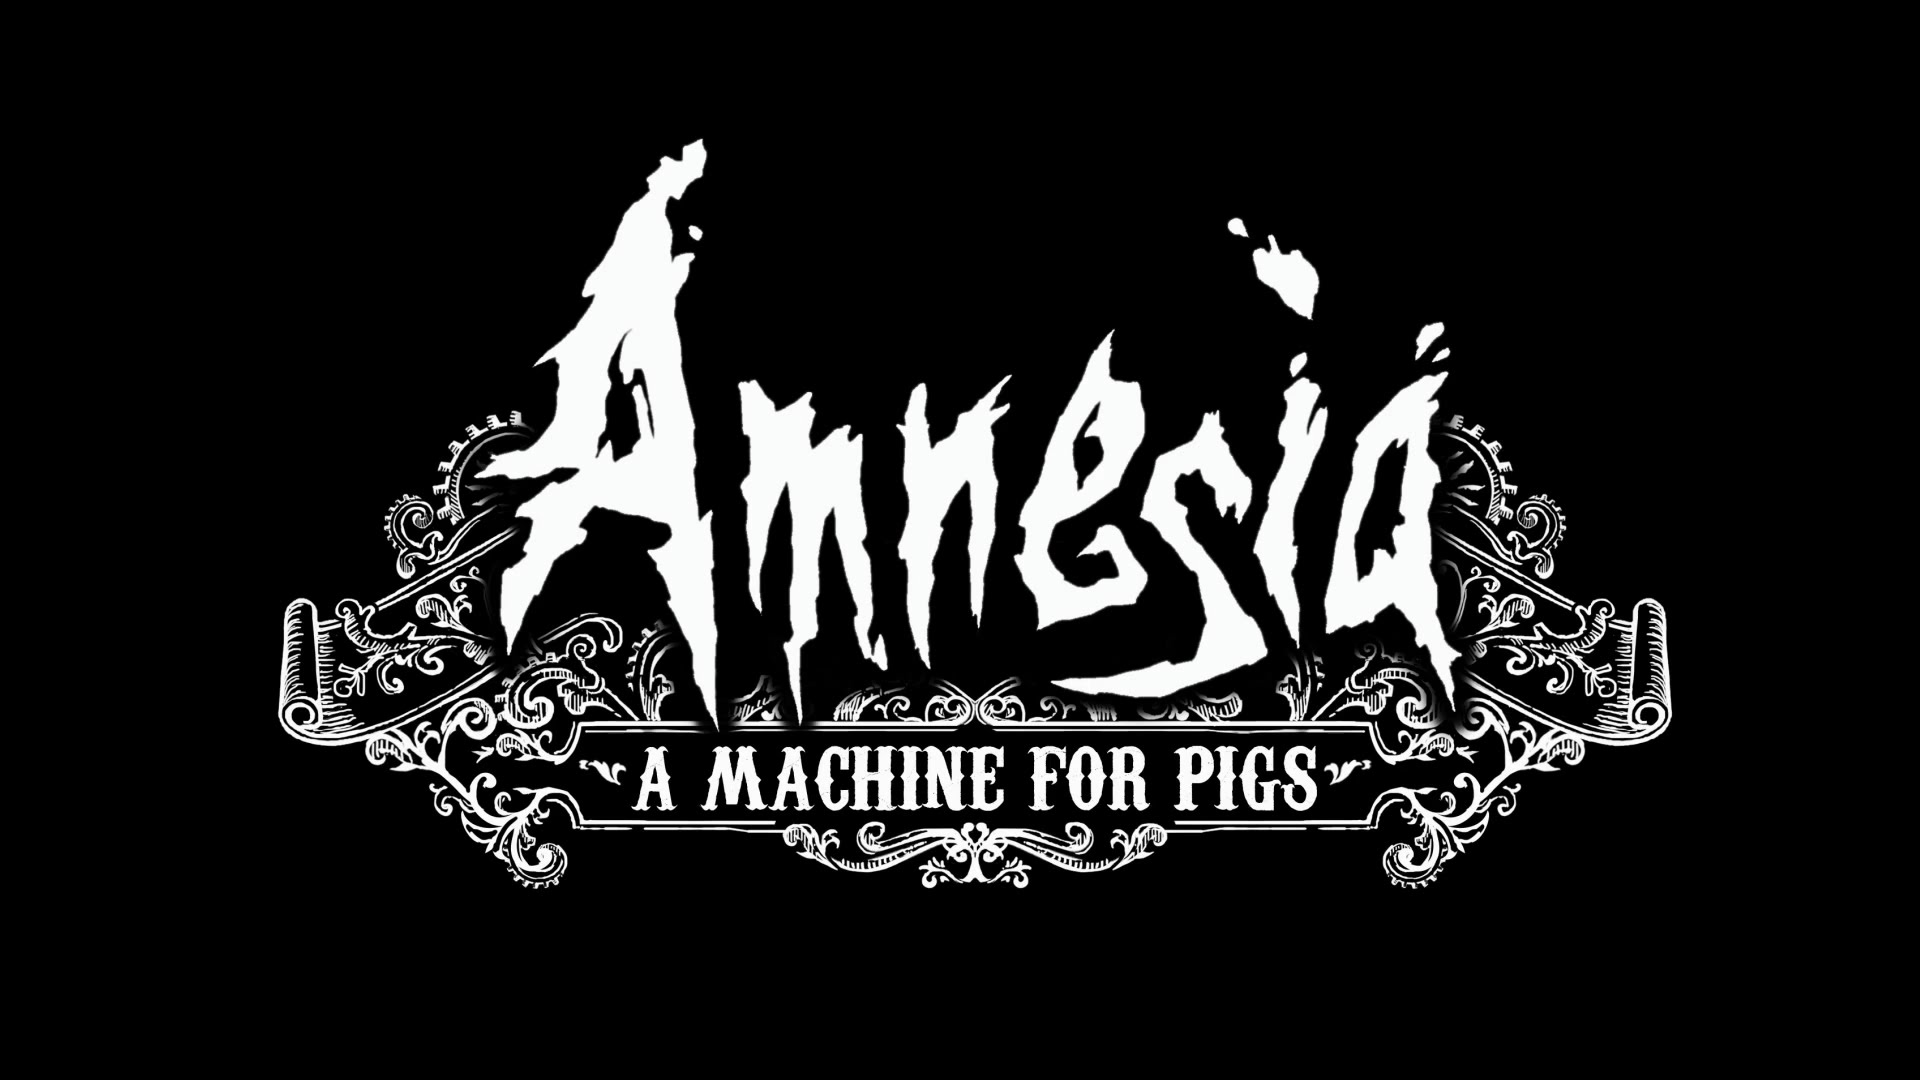 Arriba la tensió. Amnesia: A machine for pigs #16 de LwowwVlogs